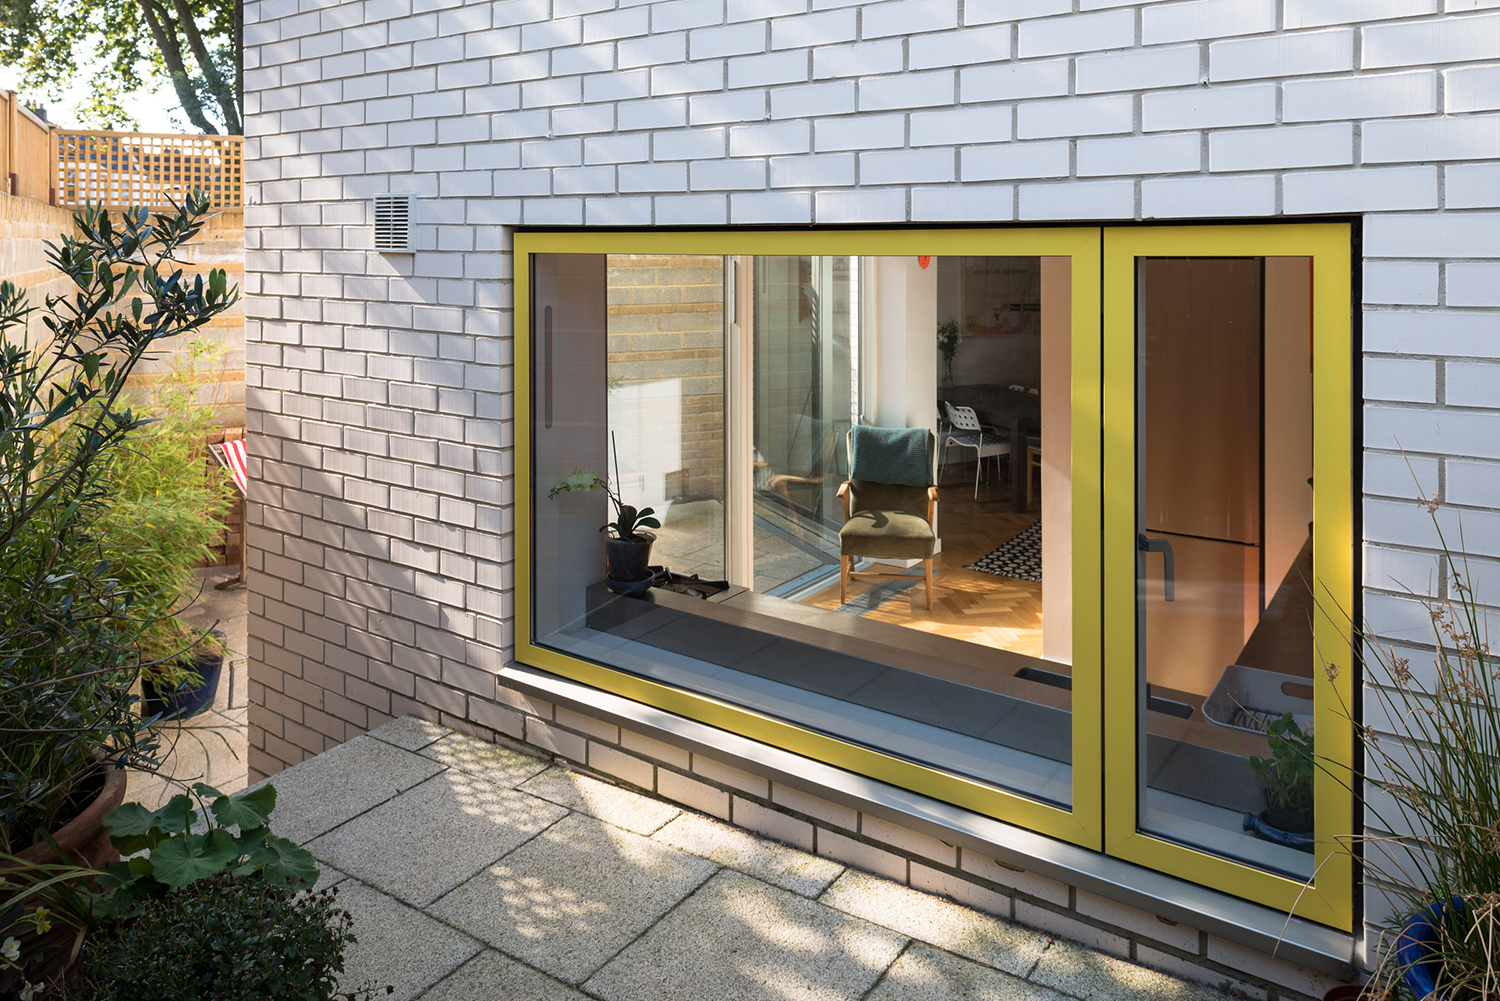 Kyverdale-Hackney-House-N16-Prewett-Bizley-Architects-grand-designs-14.jpg